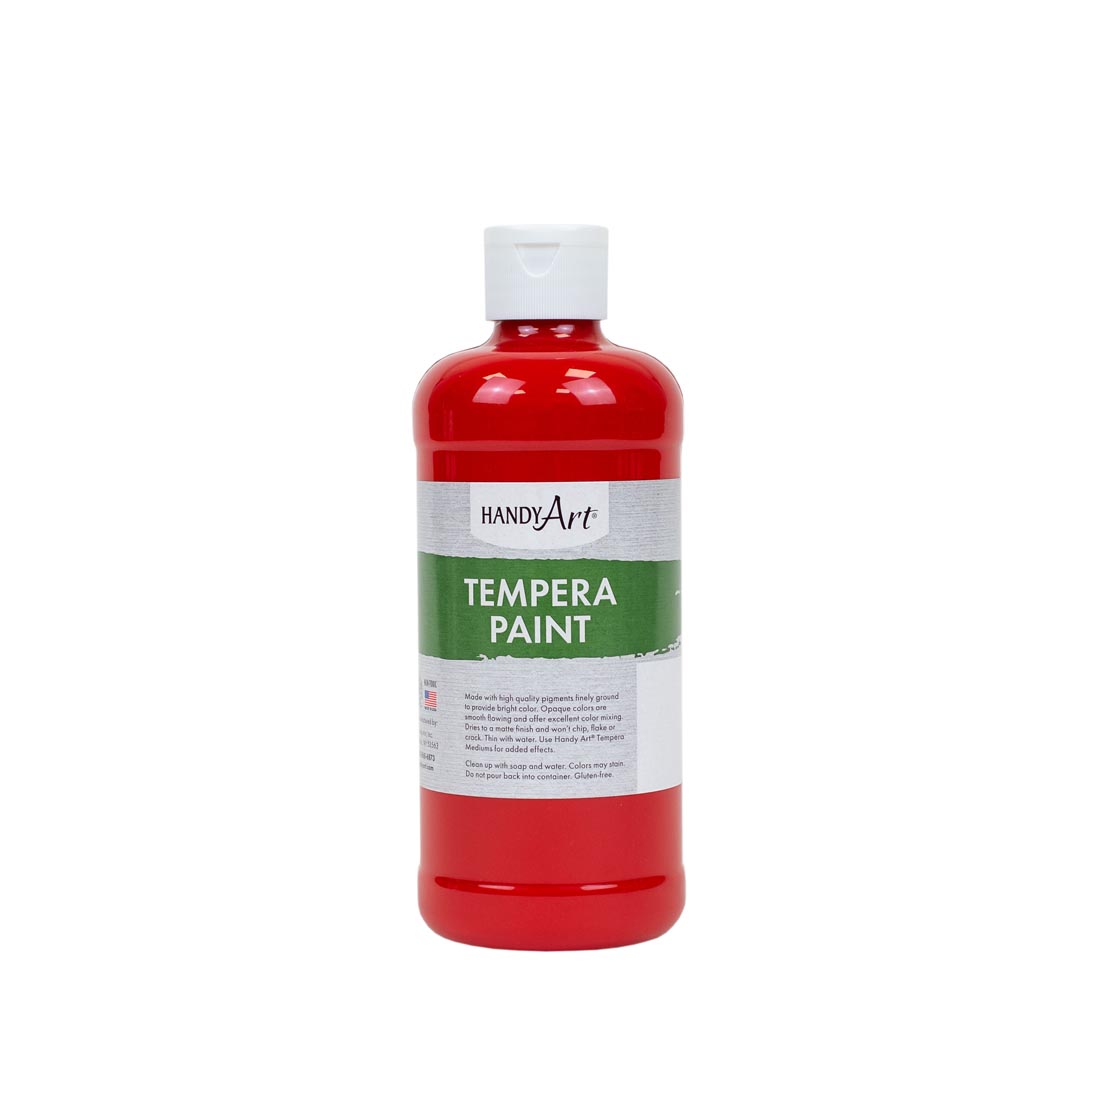 Pint bottle of Red Handy Art Tempera Paint